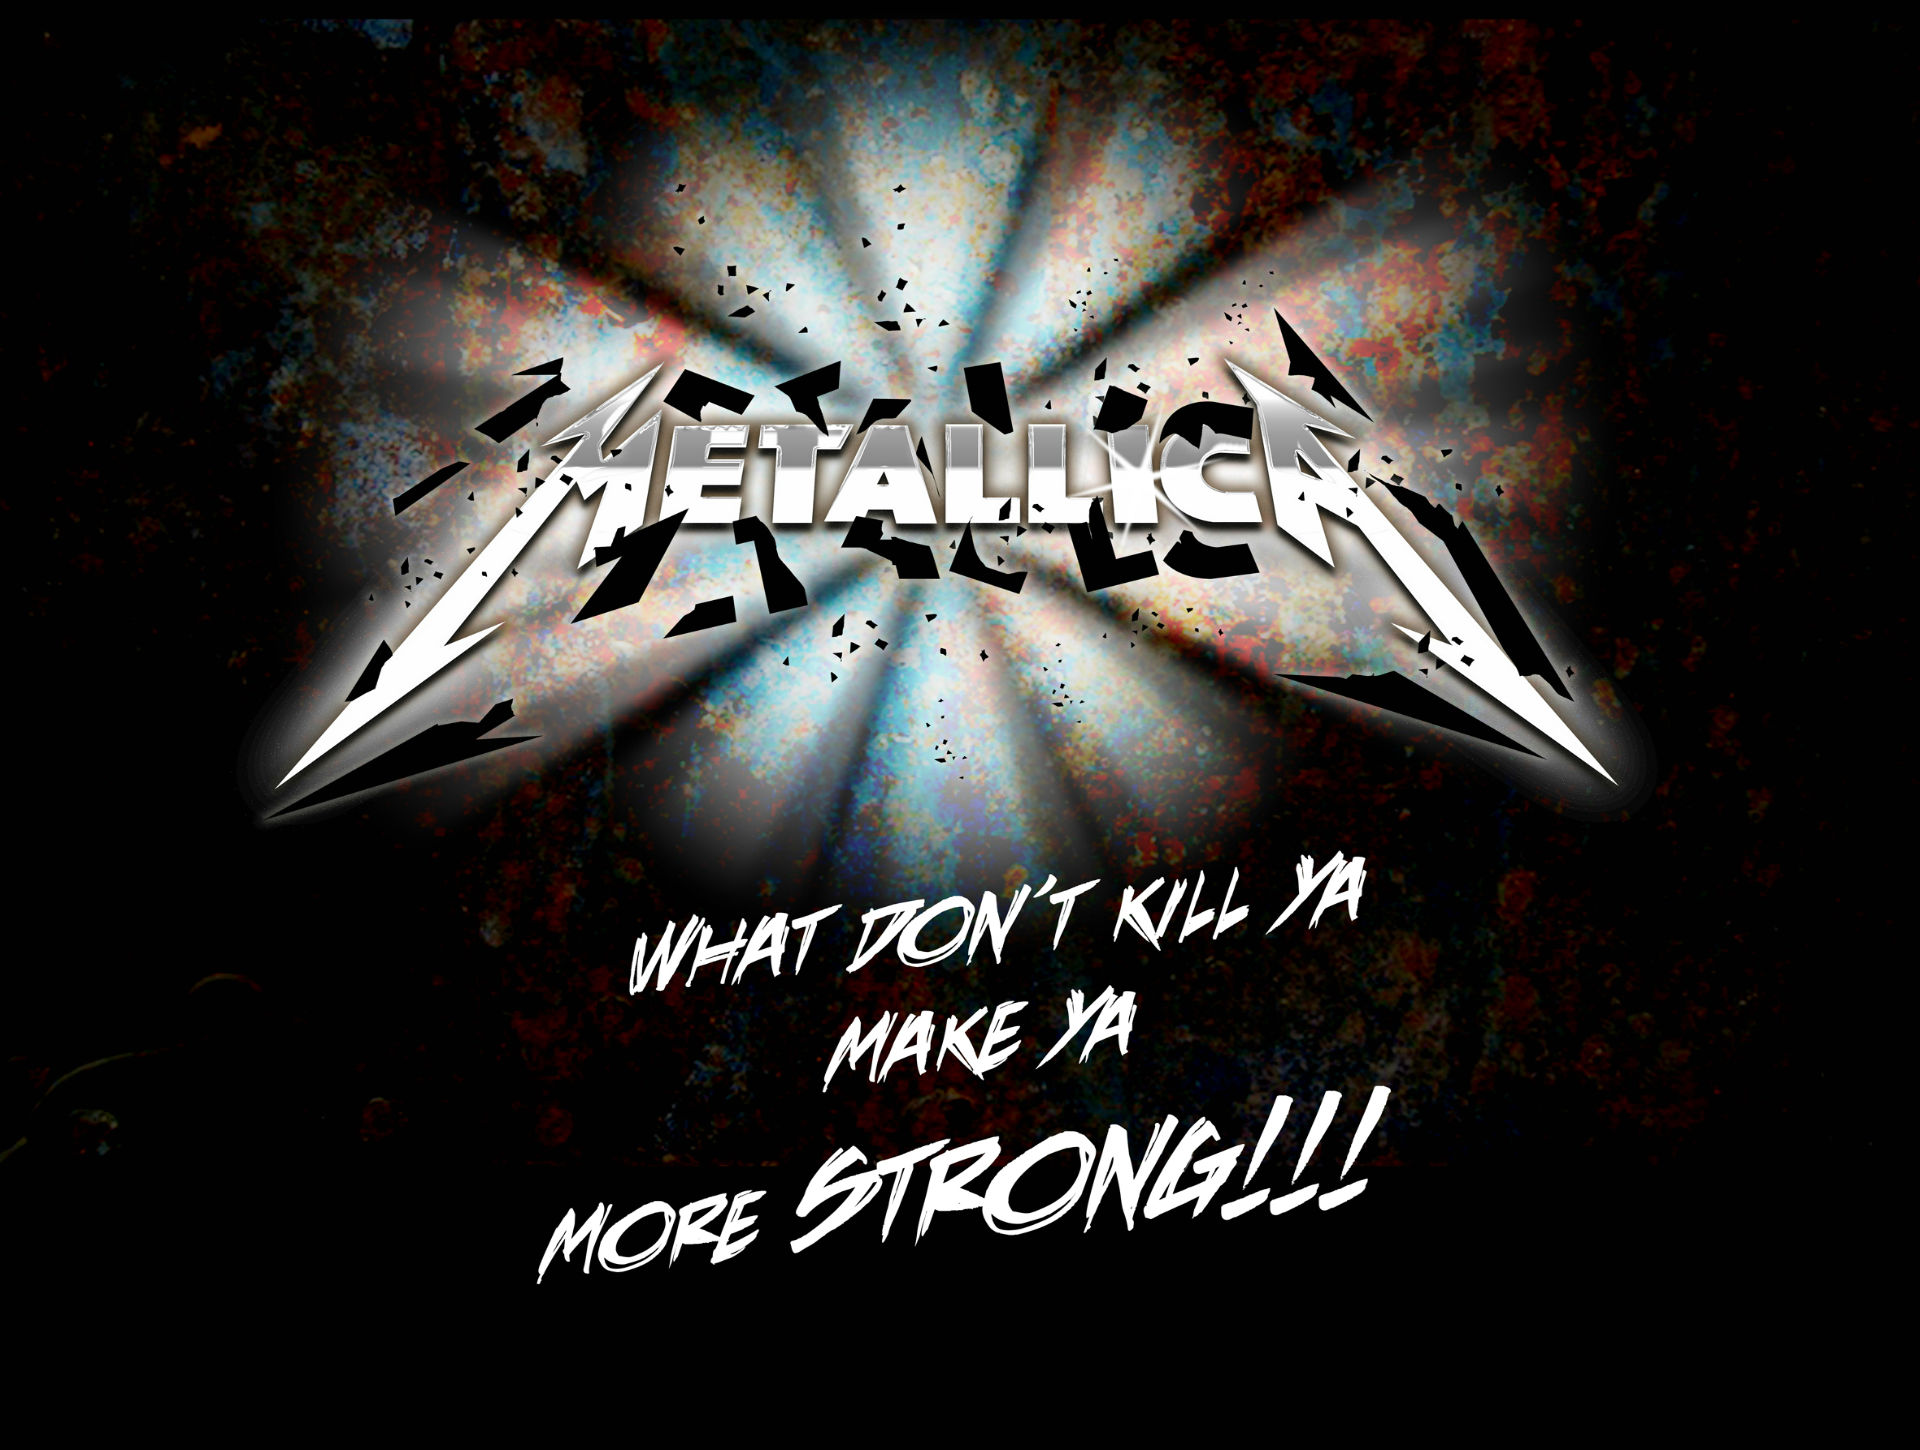 Metallica Thrash Metal Heavy Album Cover Art Poster Posters Wallpapers ...